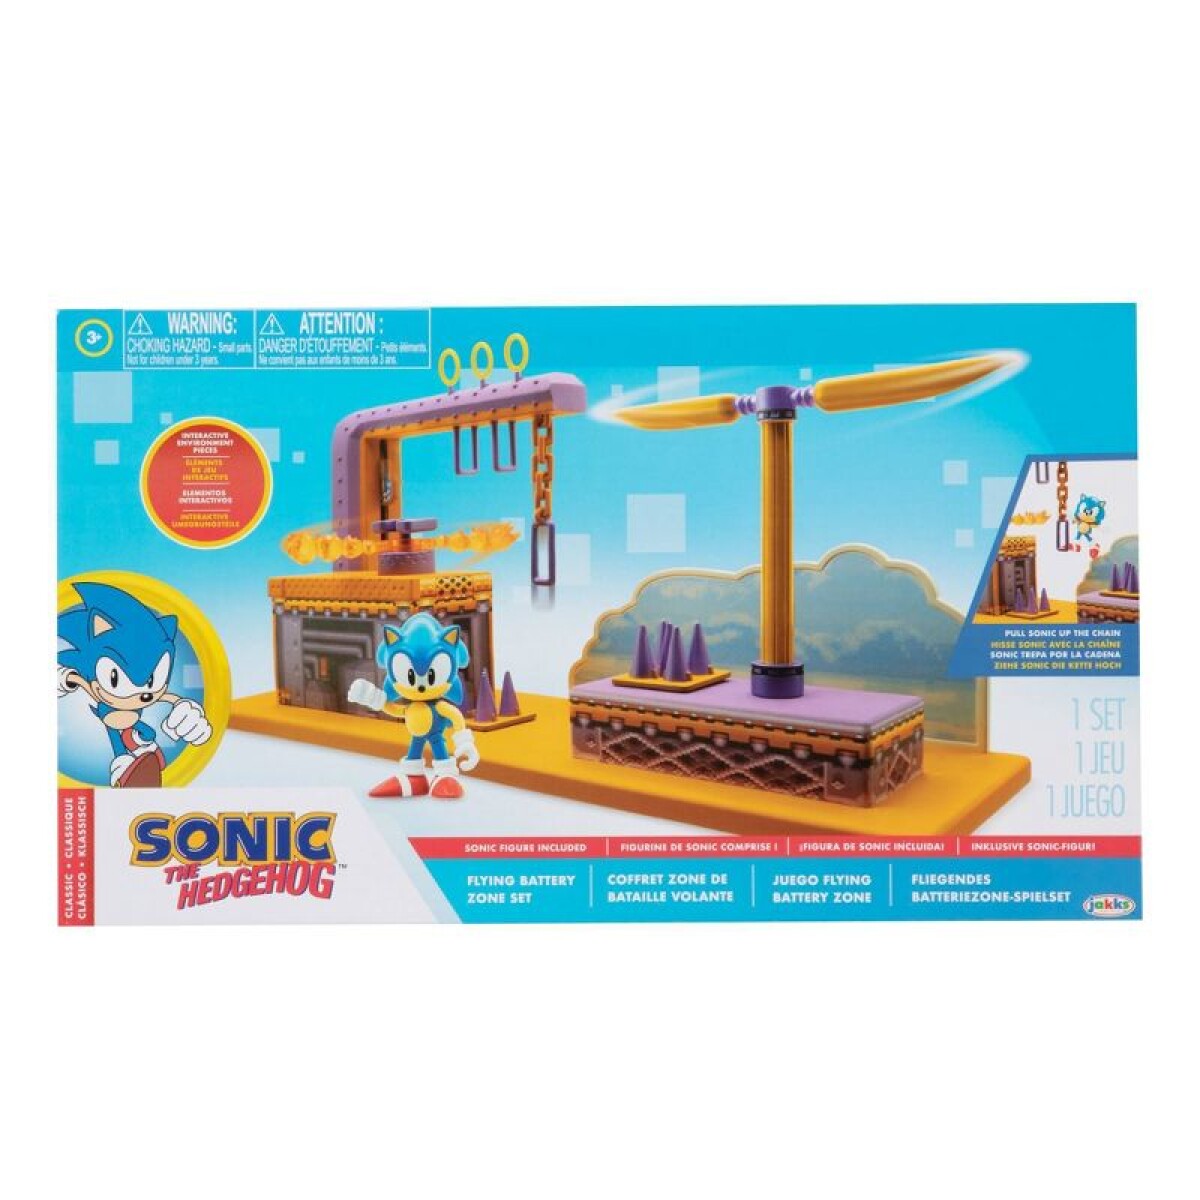 Set Sonic The Hedgehog Flying 414434 - 001 